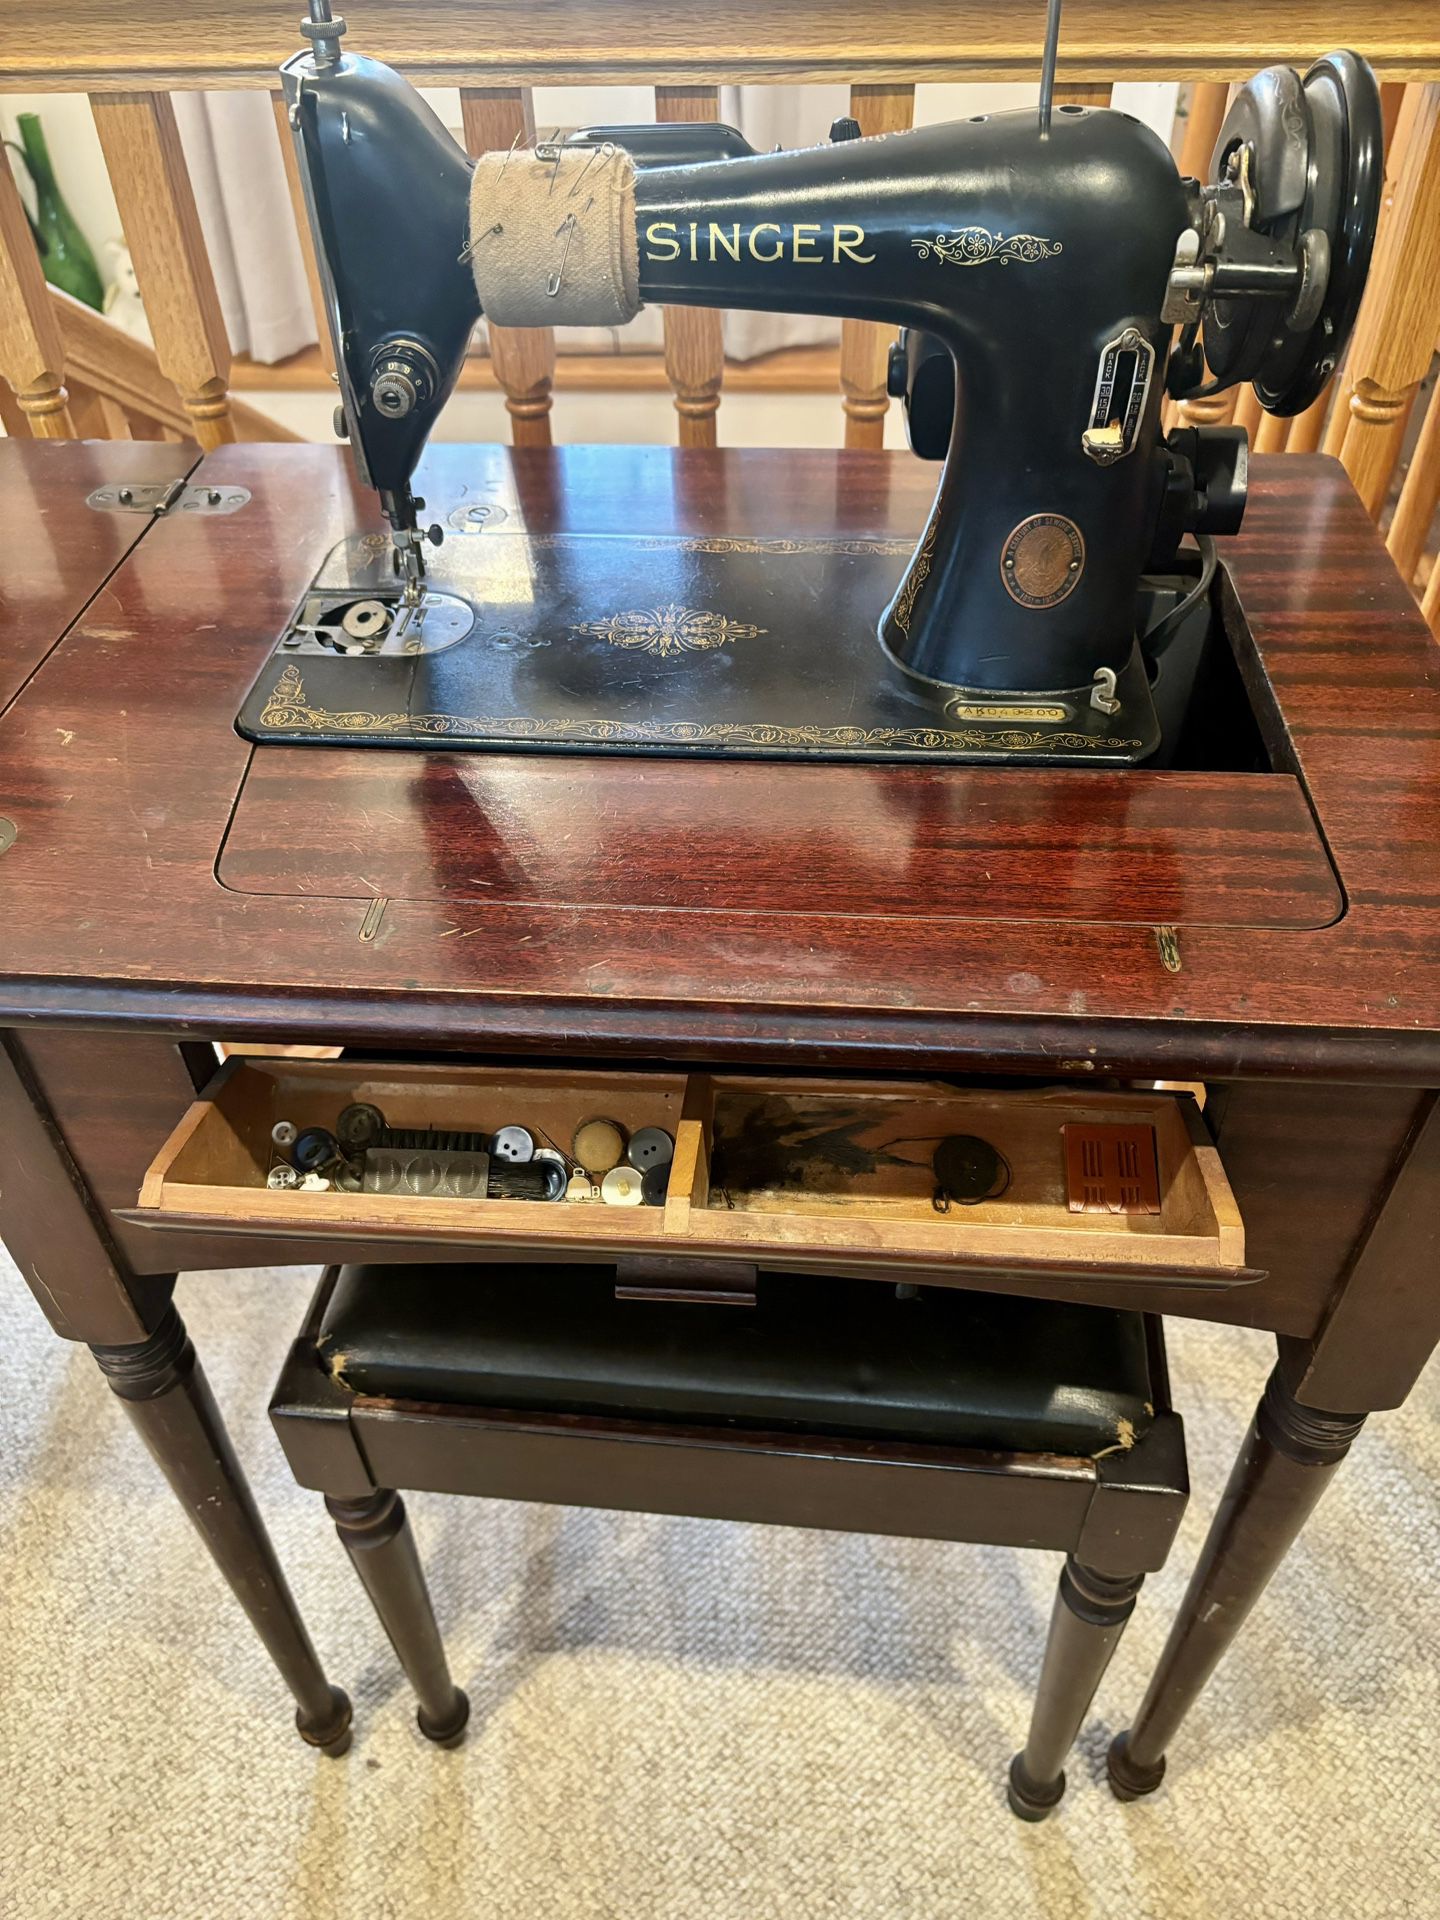 Vintage Sewing Machine w/ Stool